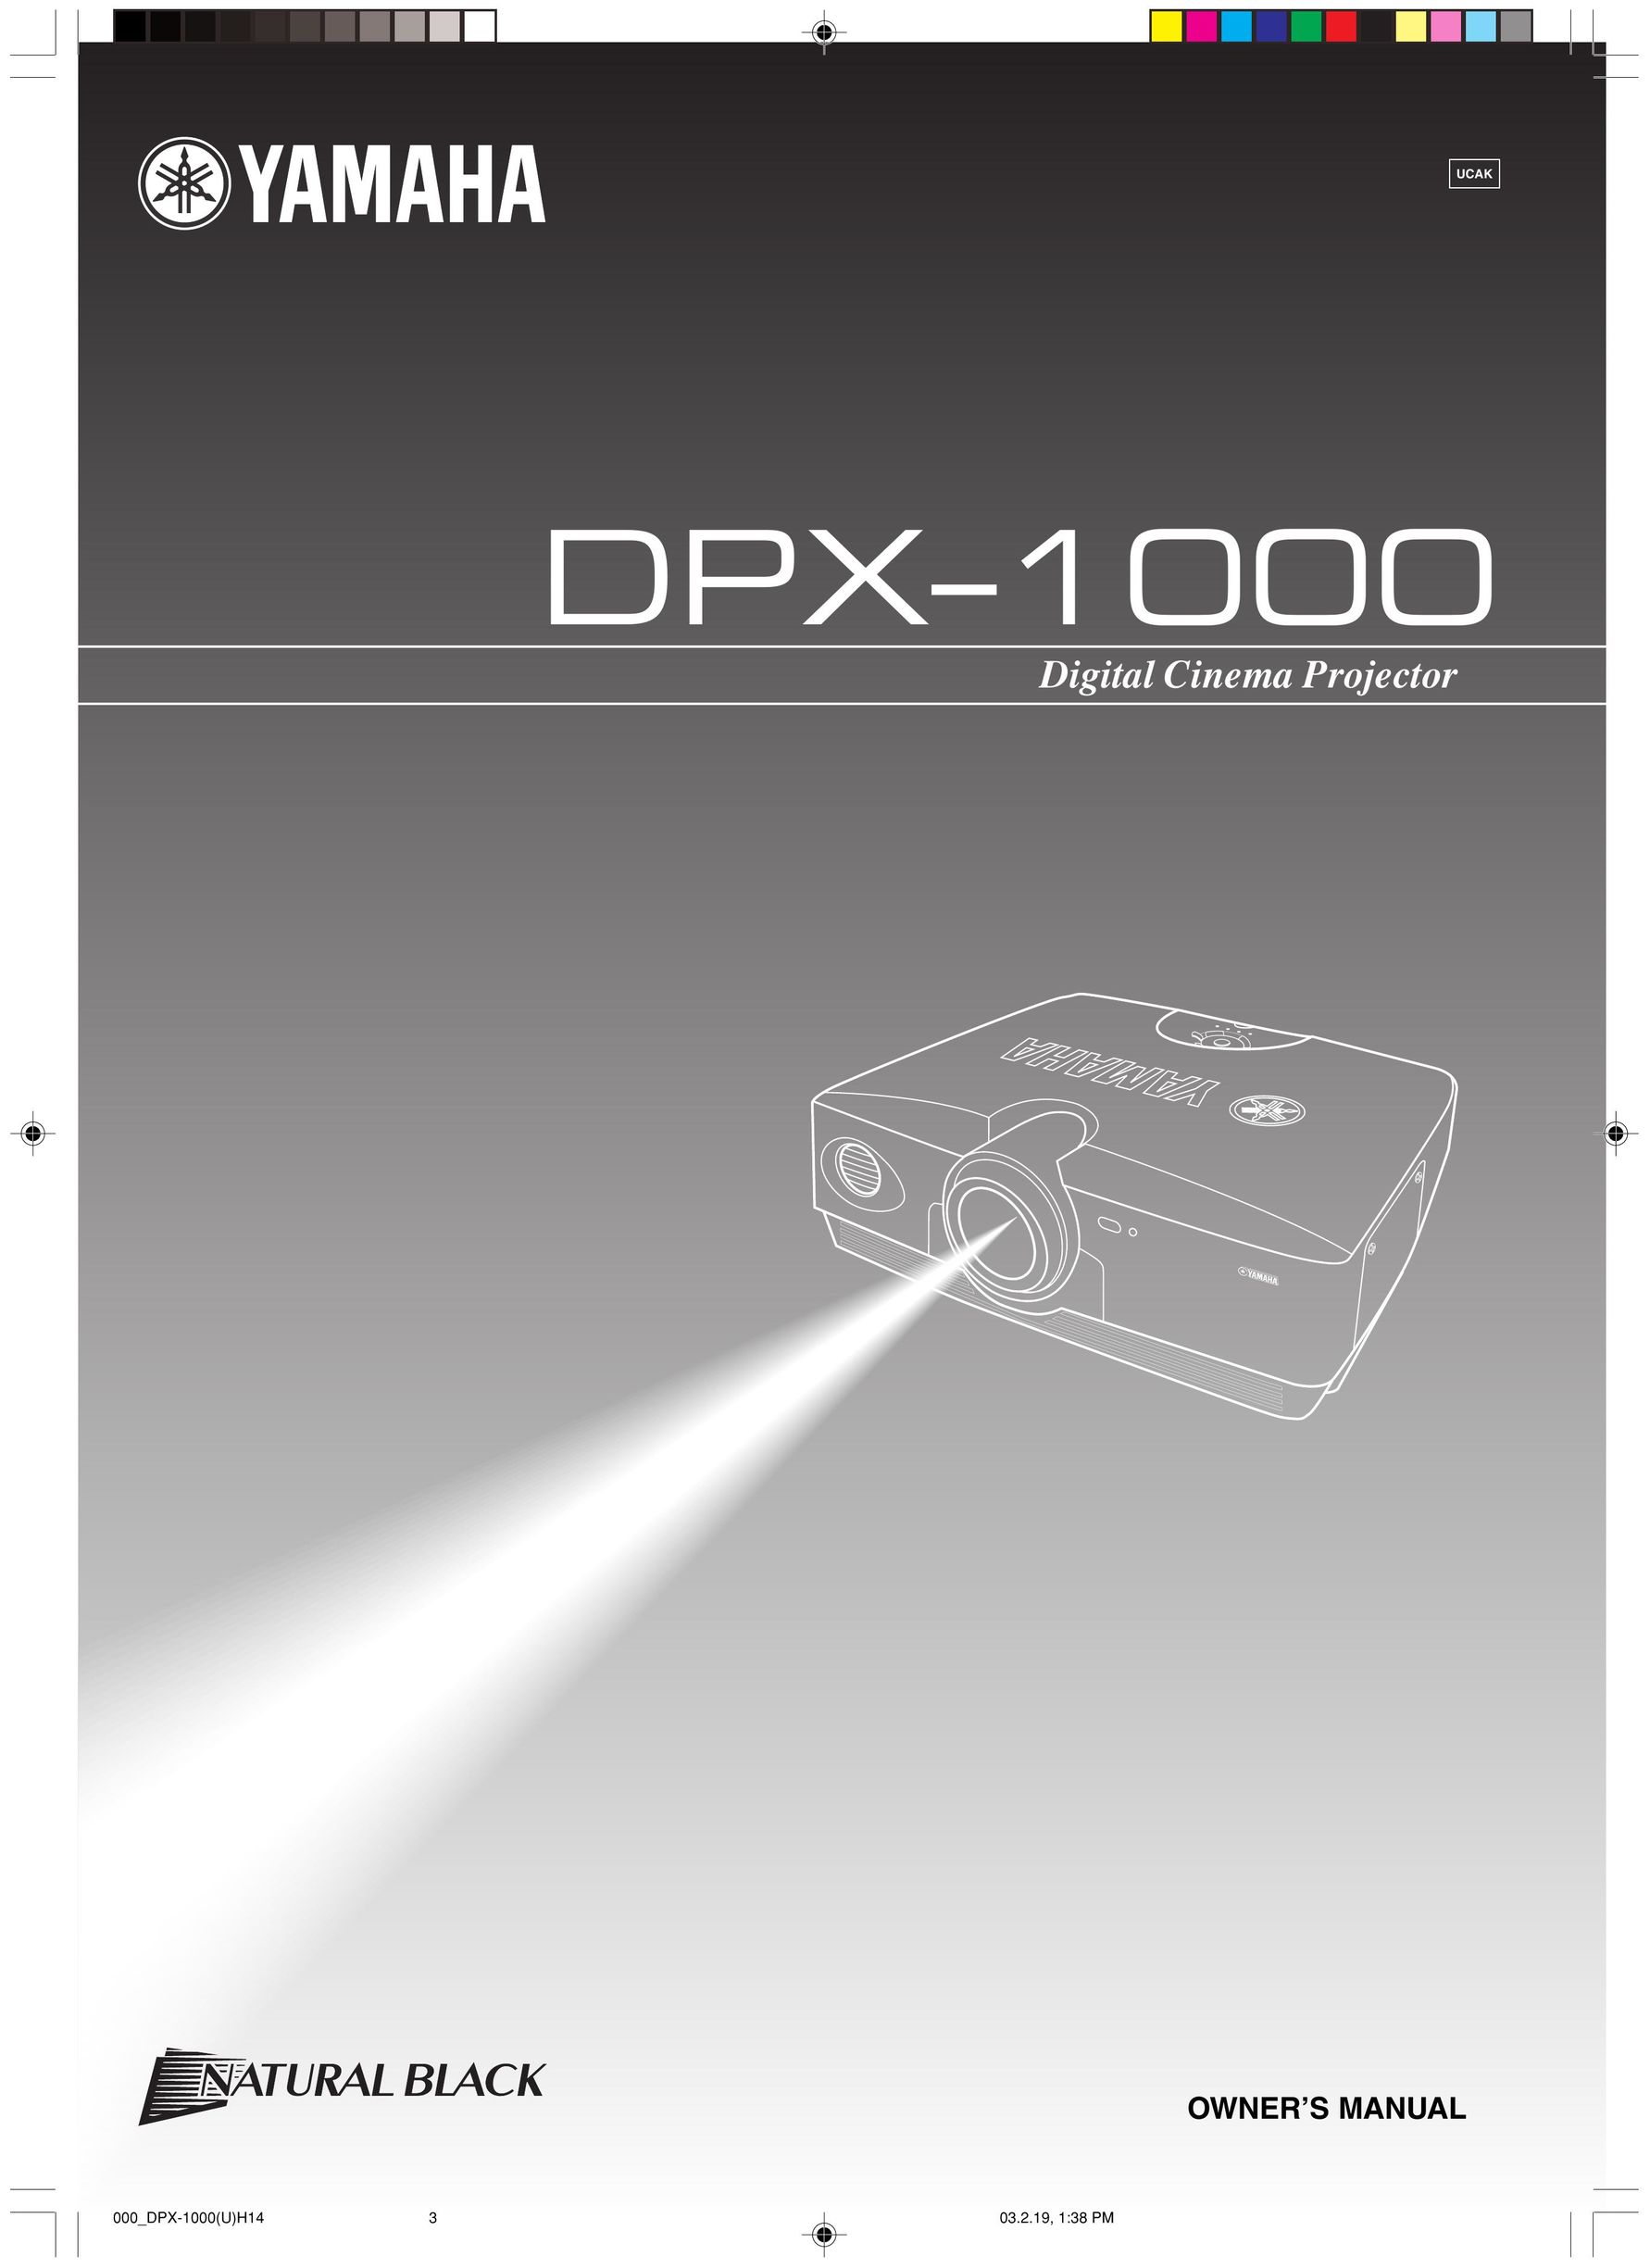 Yamaha DPX-1000 Projector User Manual